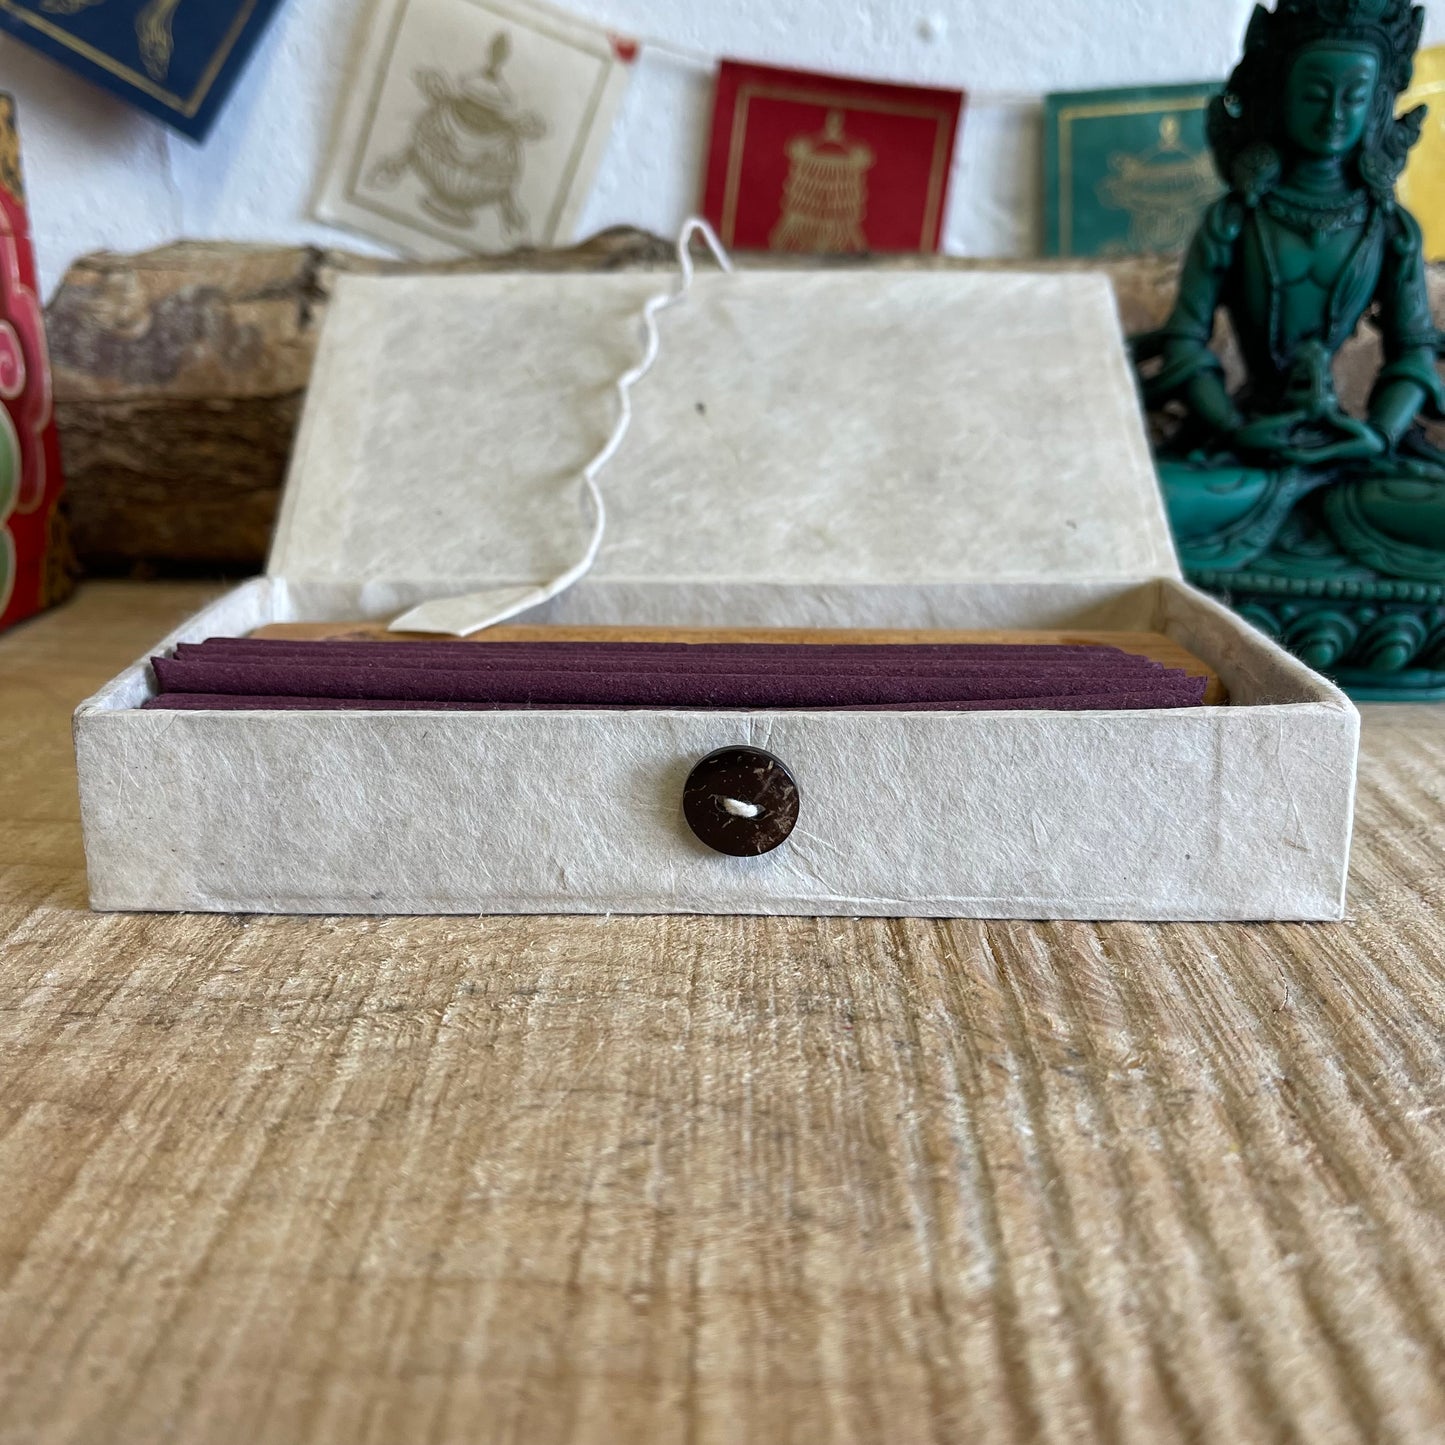 Himalayan Incense Holder& lokta Paper Box